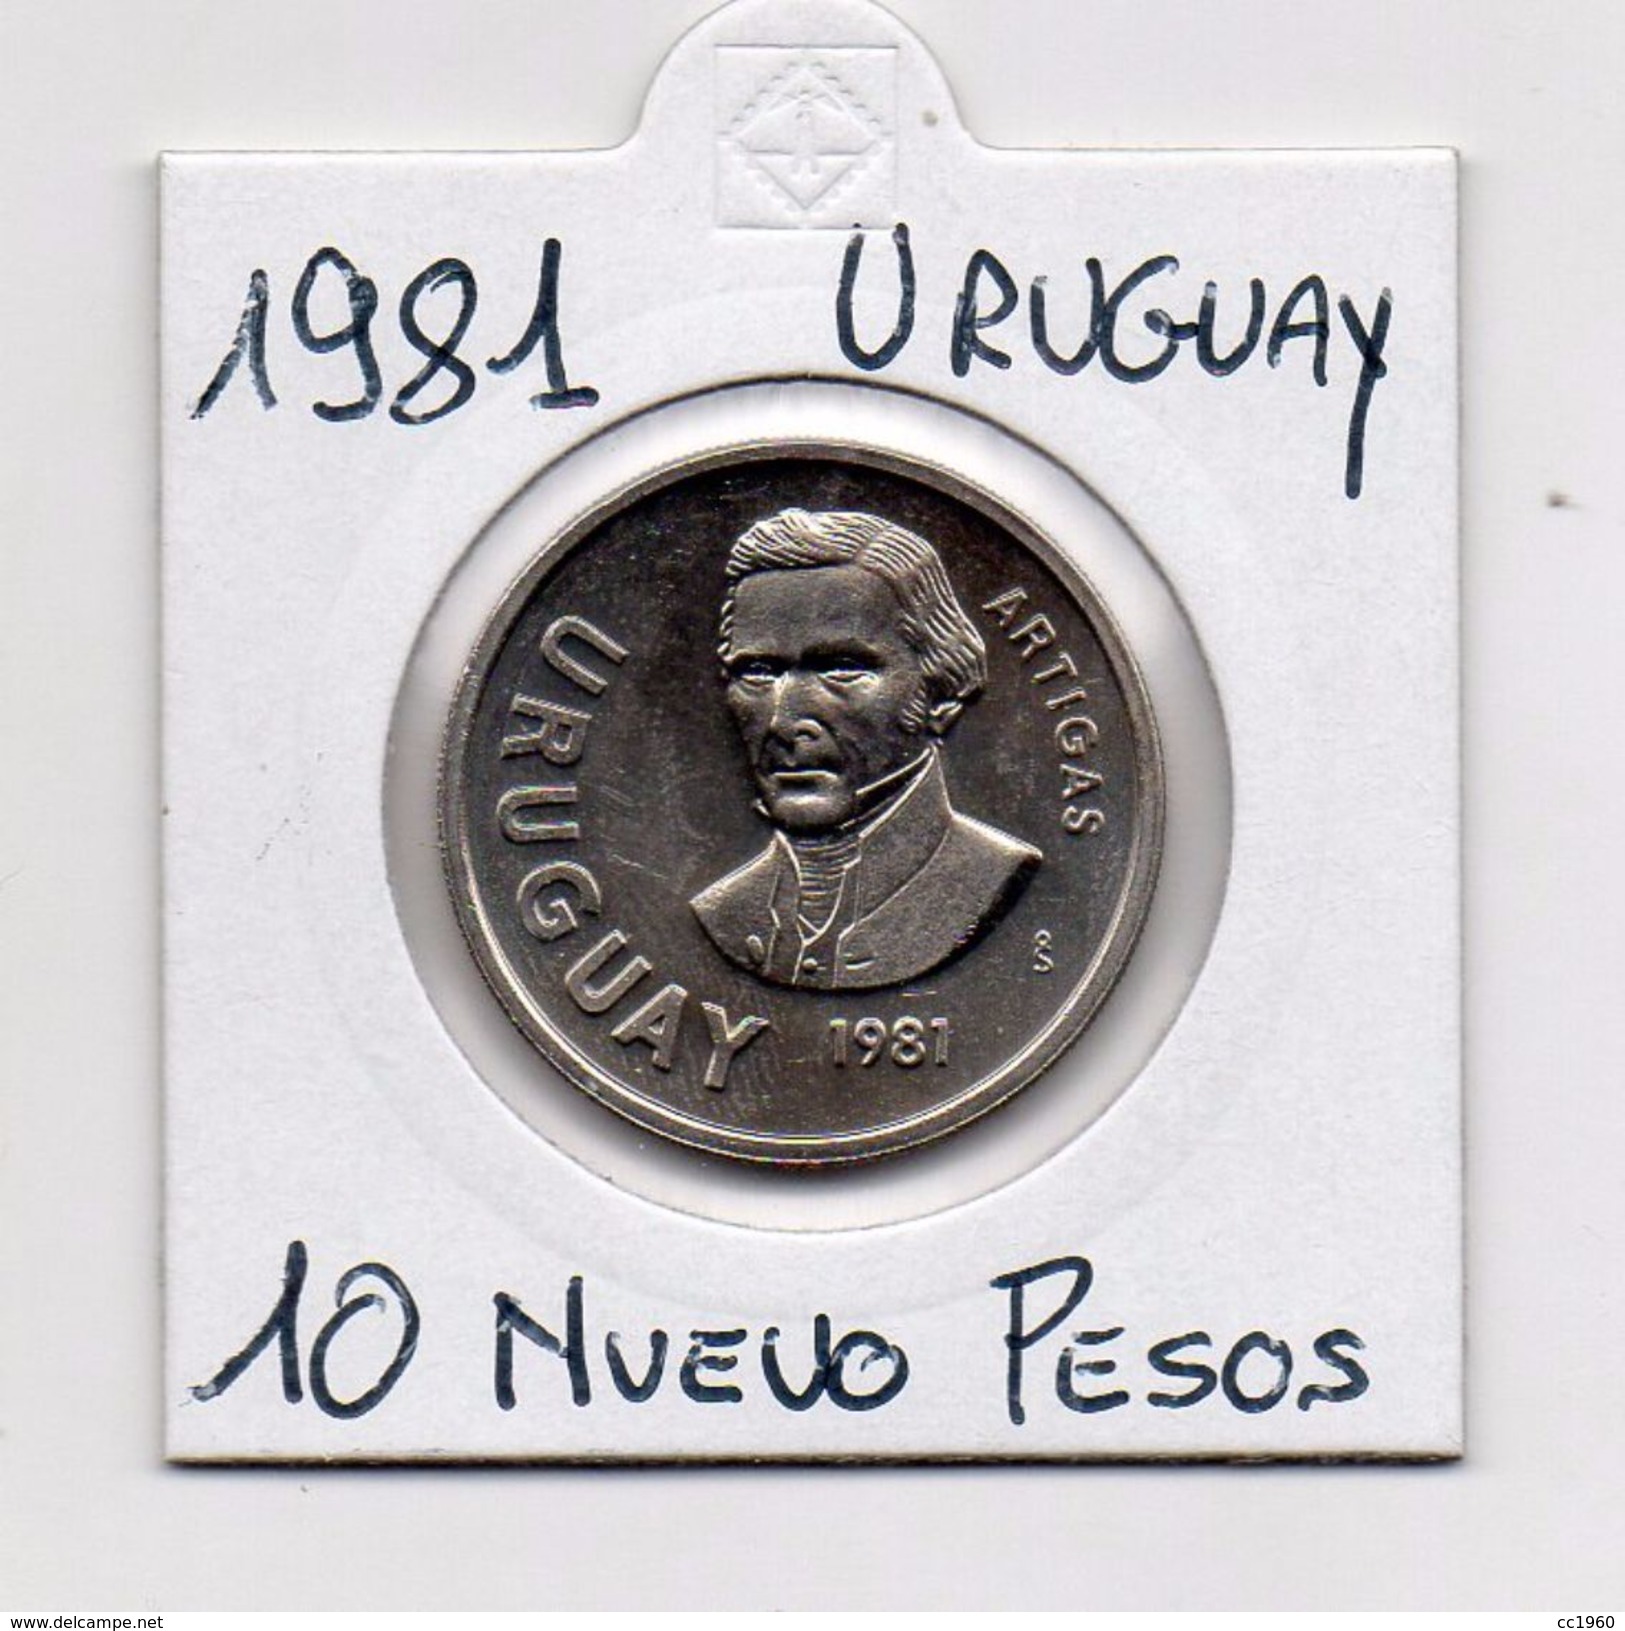 Uruguay - 1981 - 10 Pesos - Vedi Foto - (MW343) - Uruguay